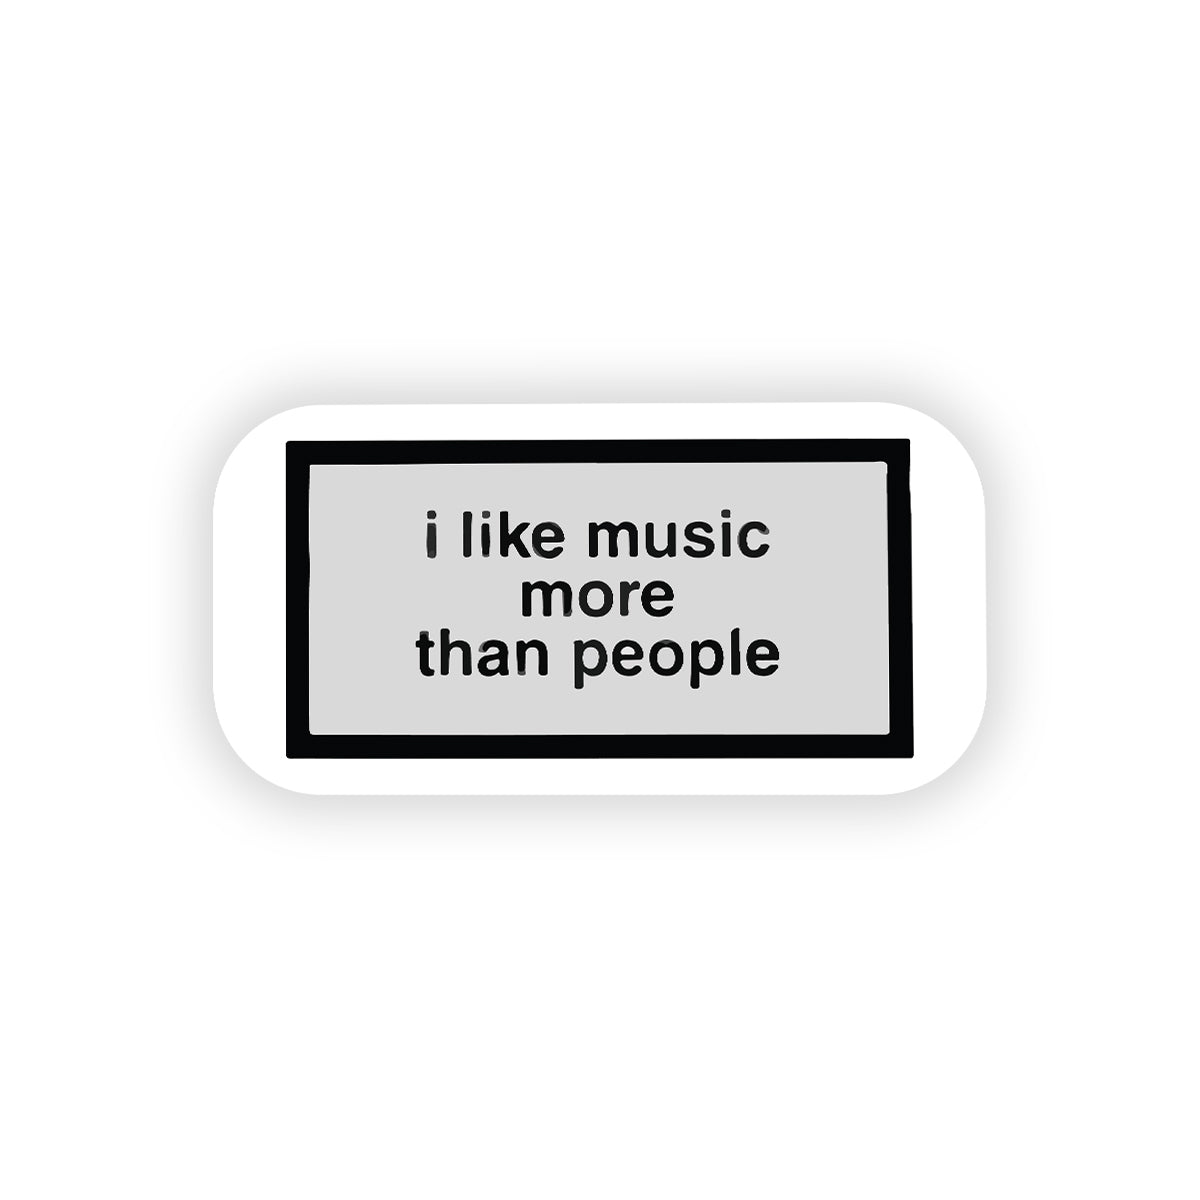 I like music more than people